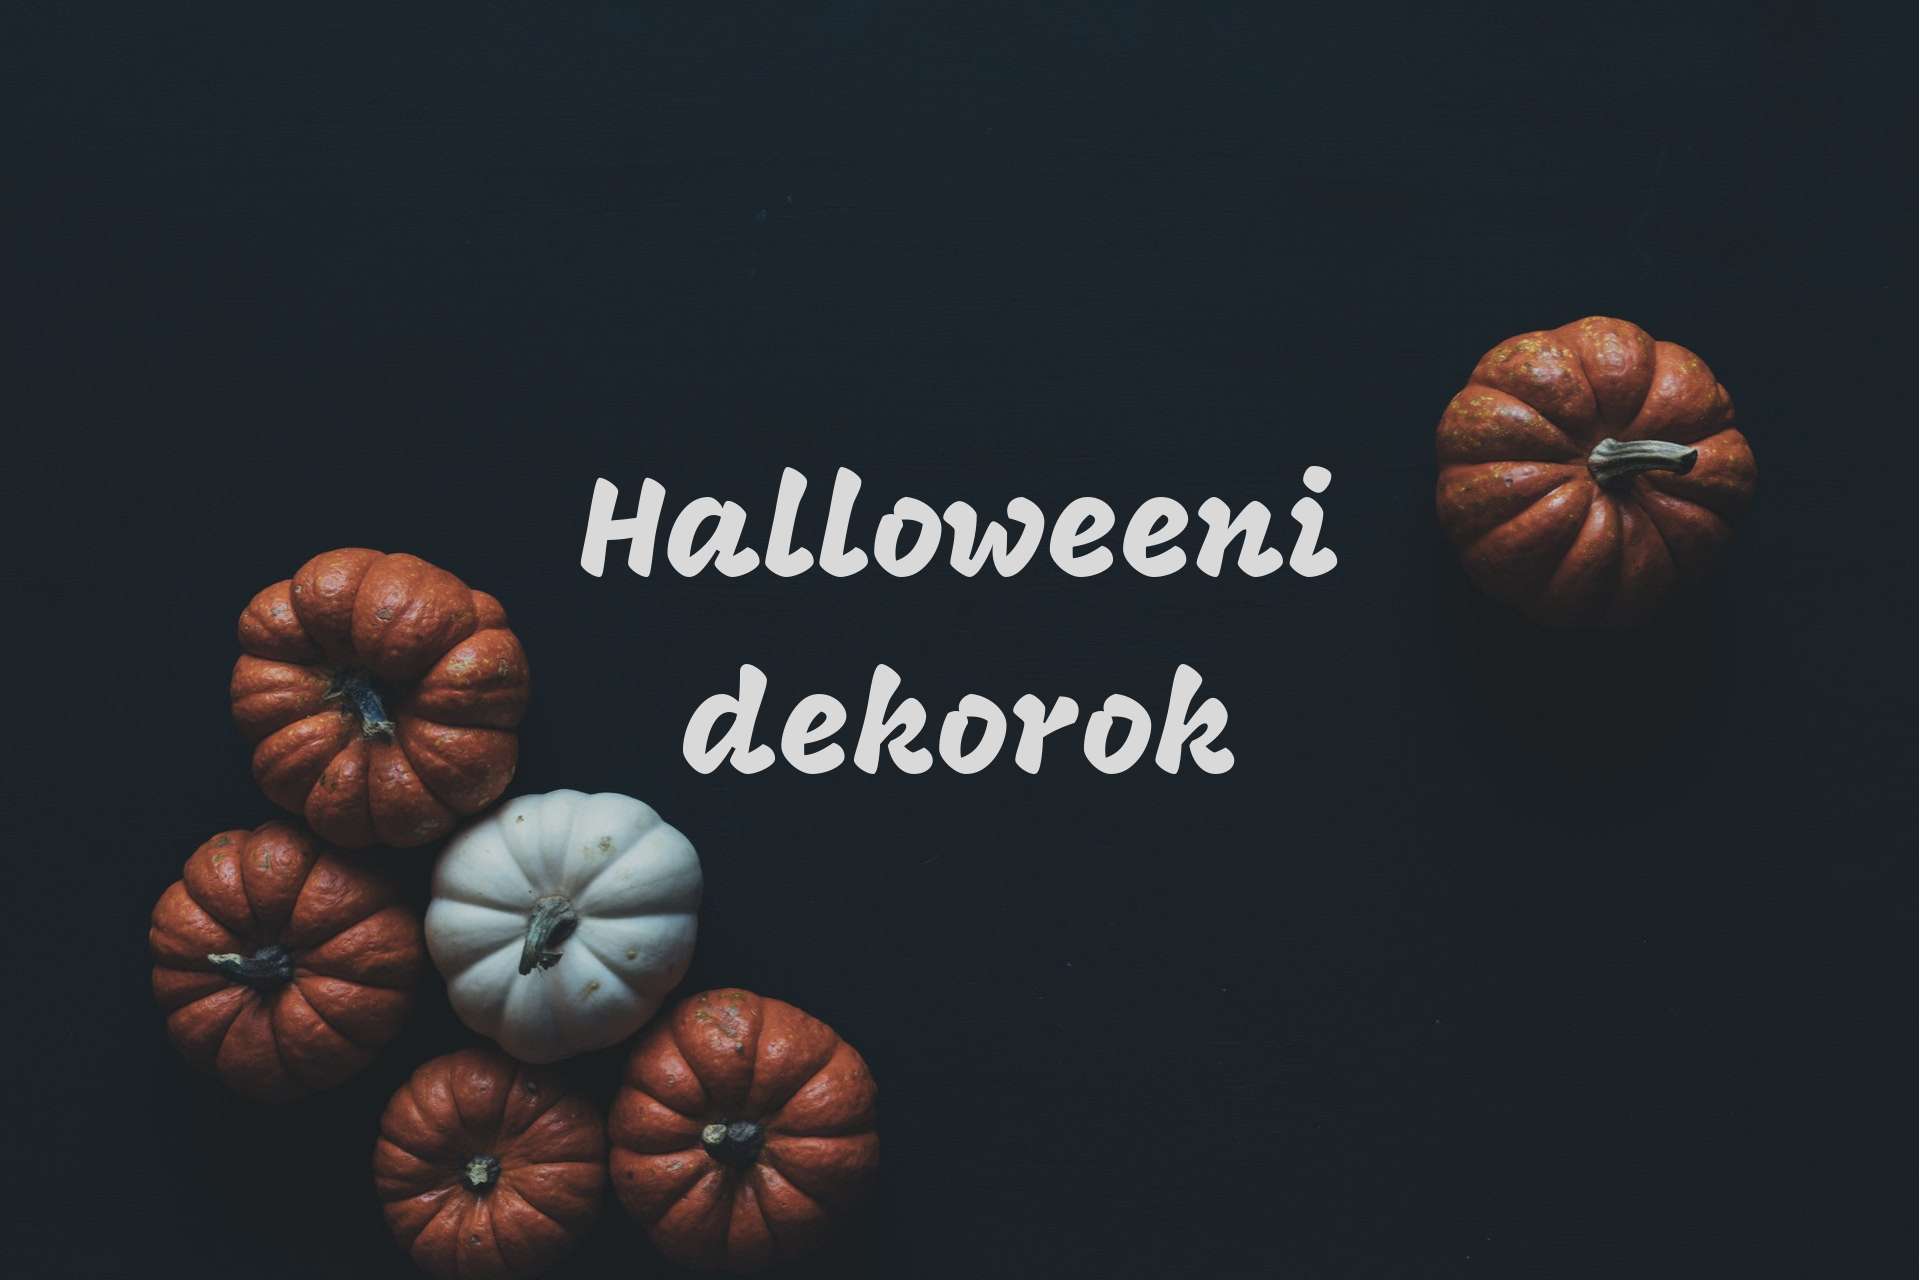 halloweeni_szokasok_masolata_1.png